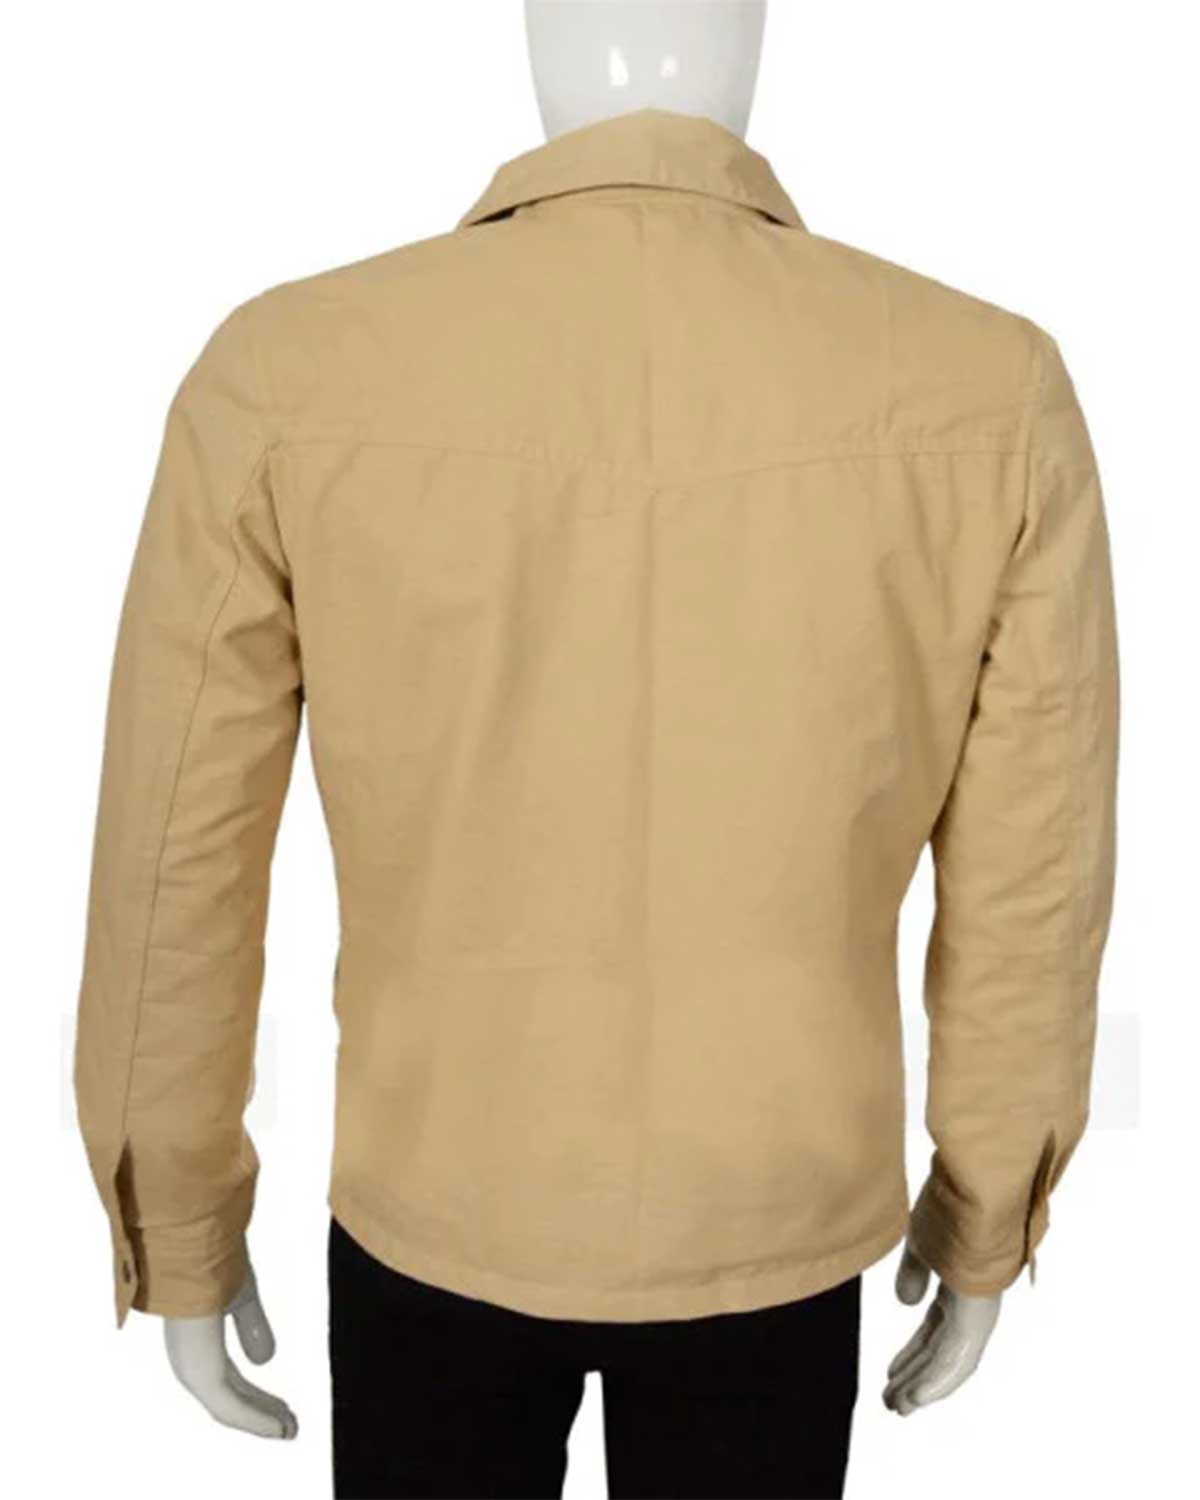 Elite Denim Richards Yellowstone Colby Cotton Jacket